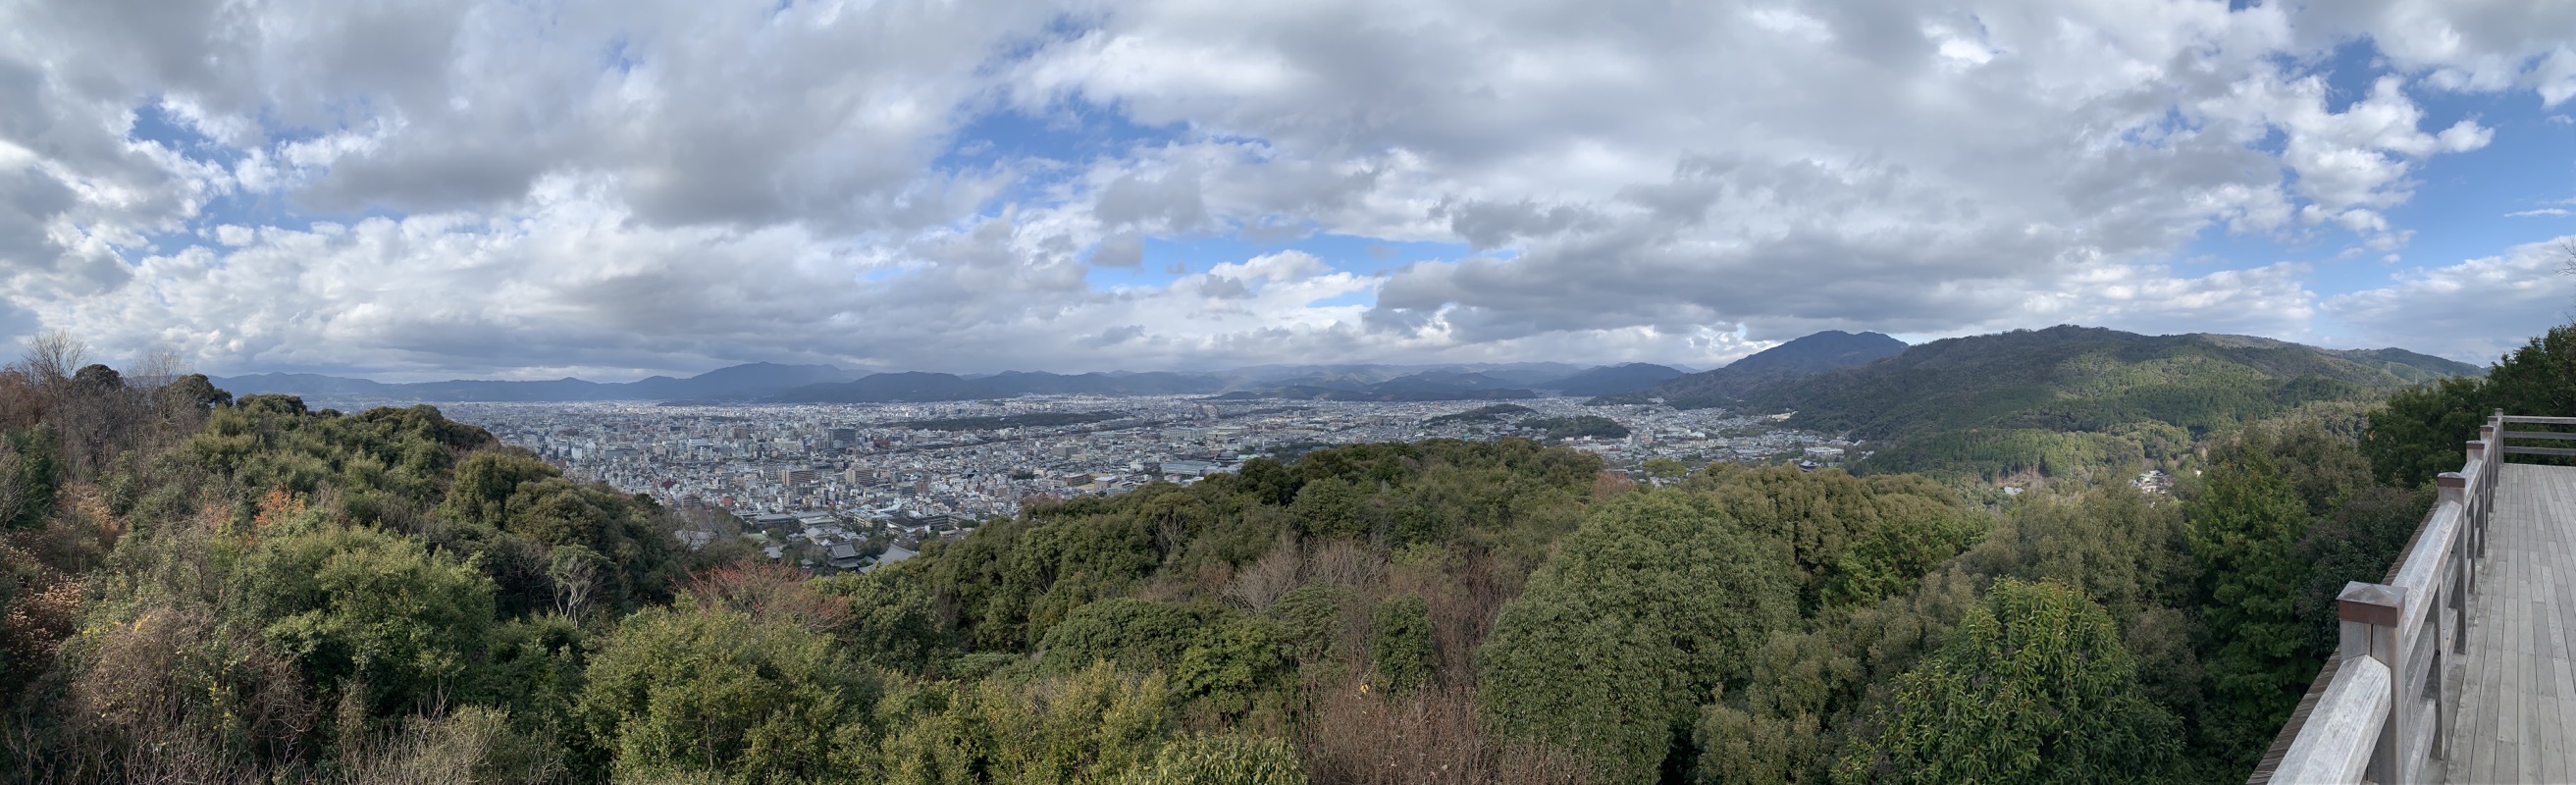 shogunzuka outlook panorama